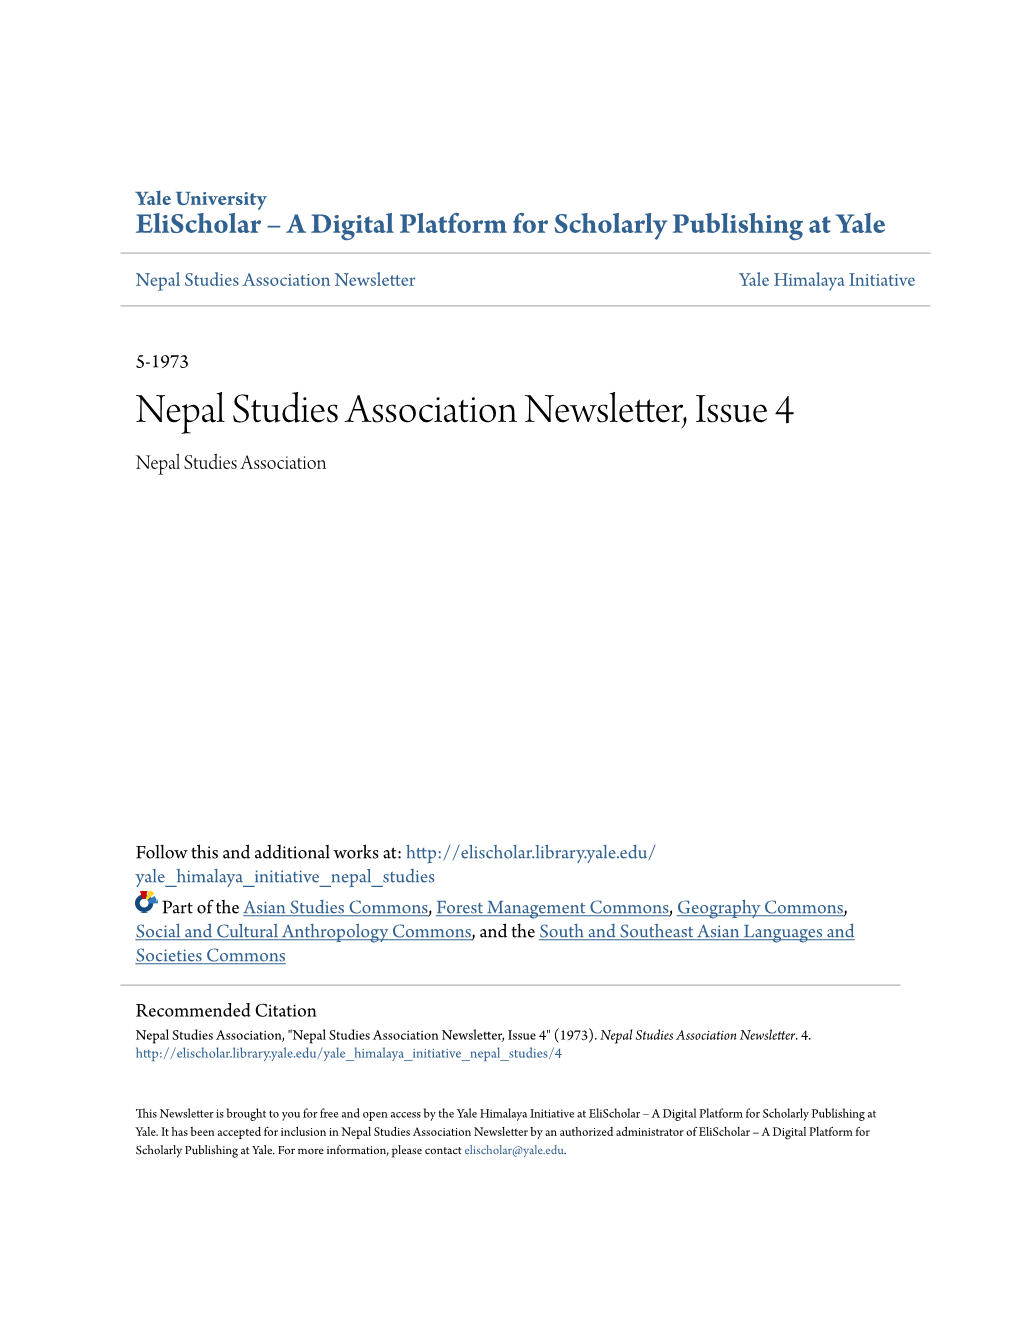 Nepal Studies Association Newsletter, Issue 4 Nepal Studies Association